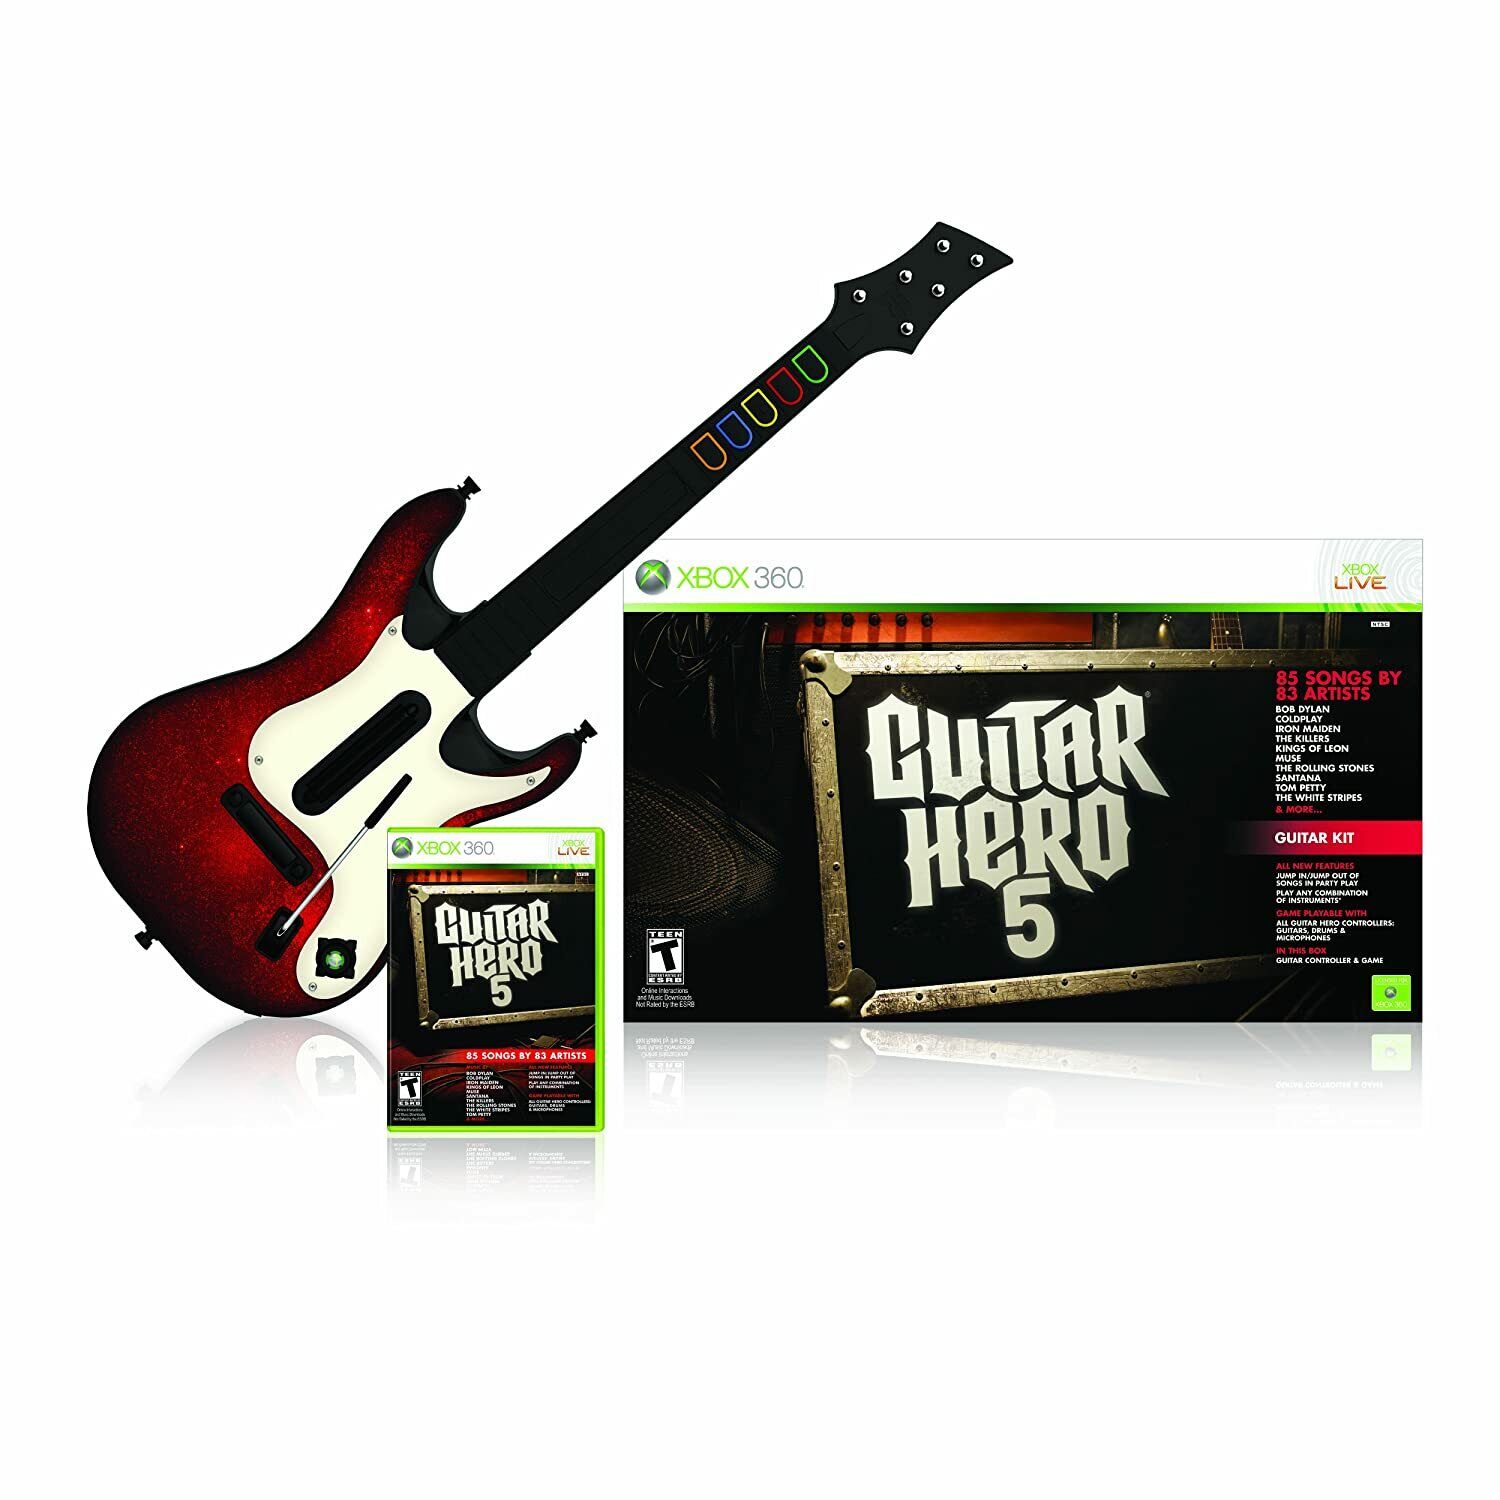 Xbox 360 Guitar Hero 5 Bundle eBay